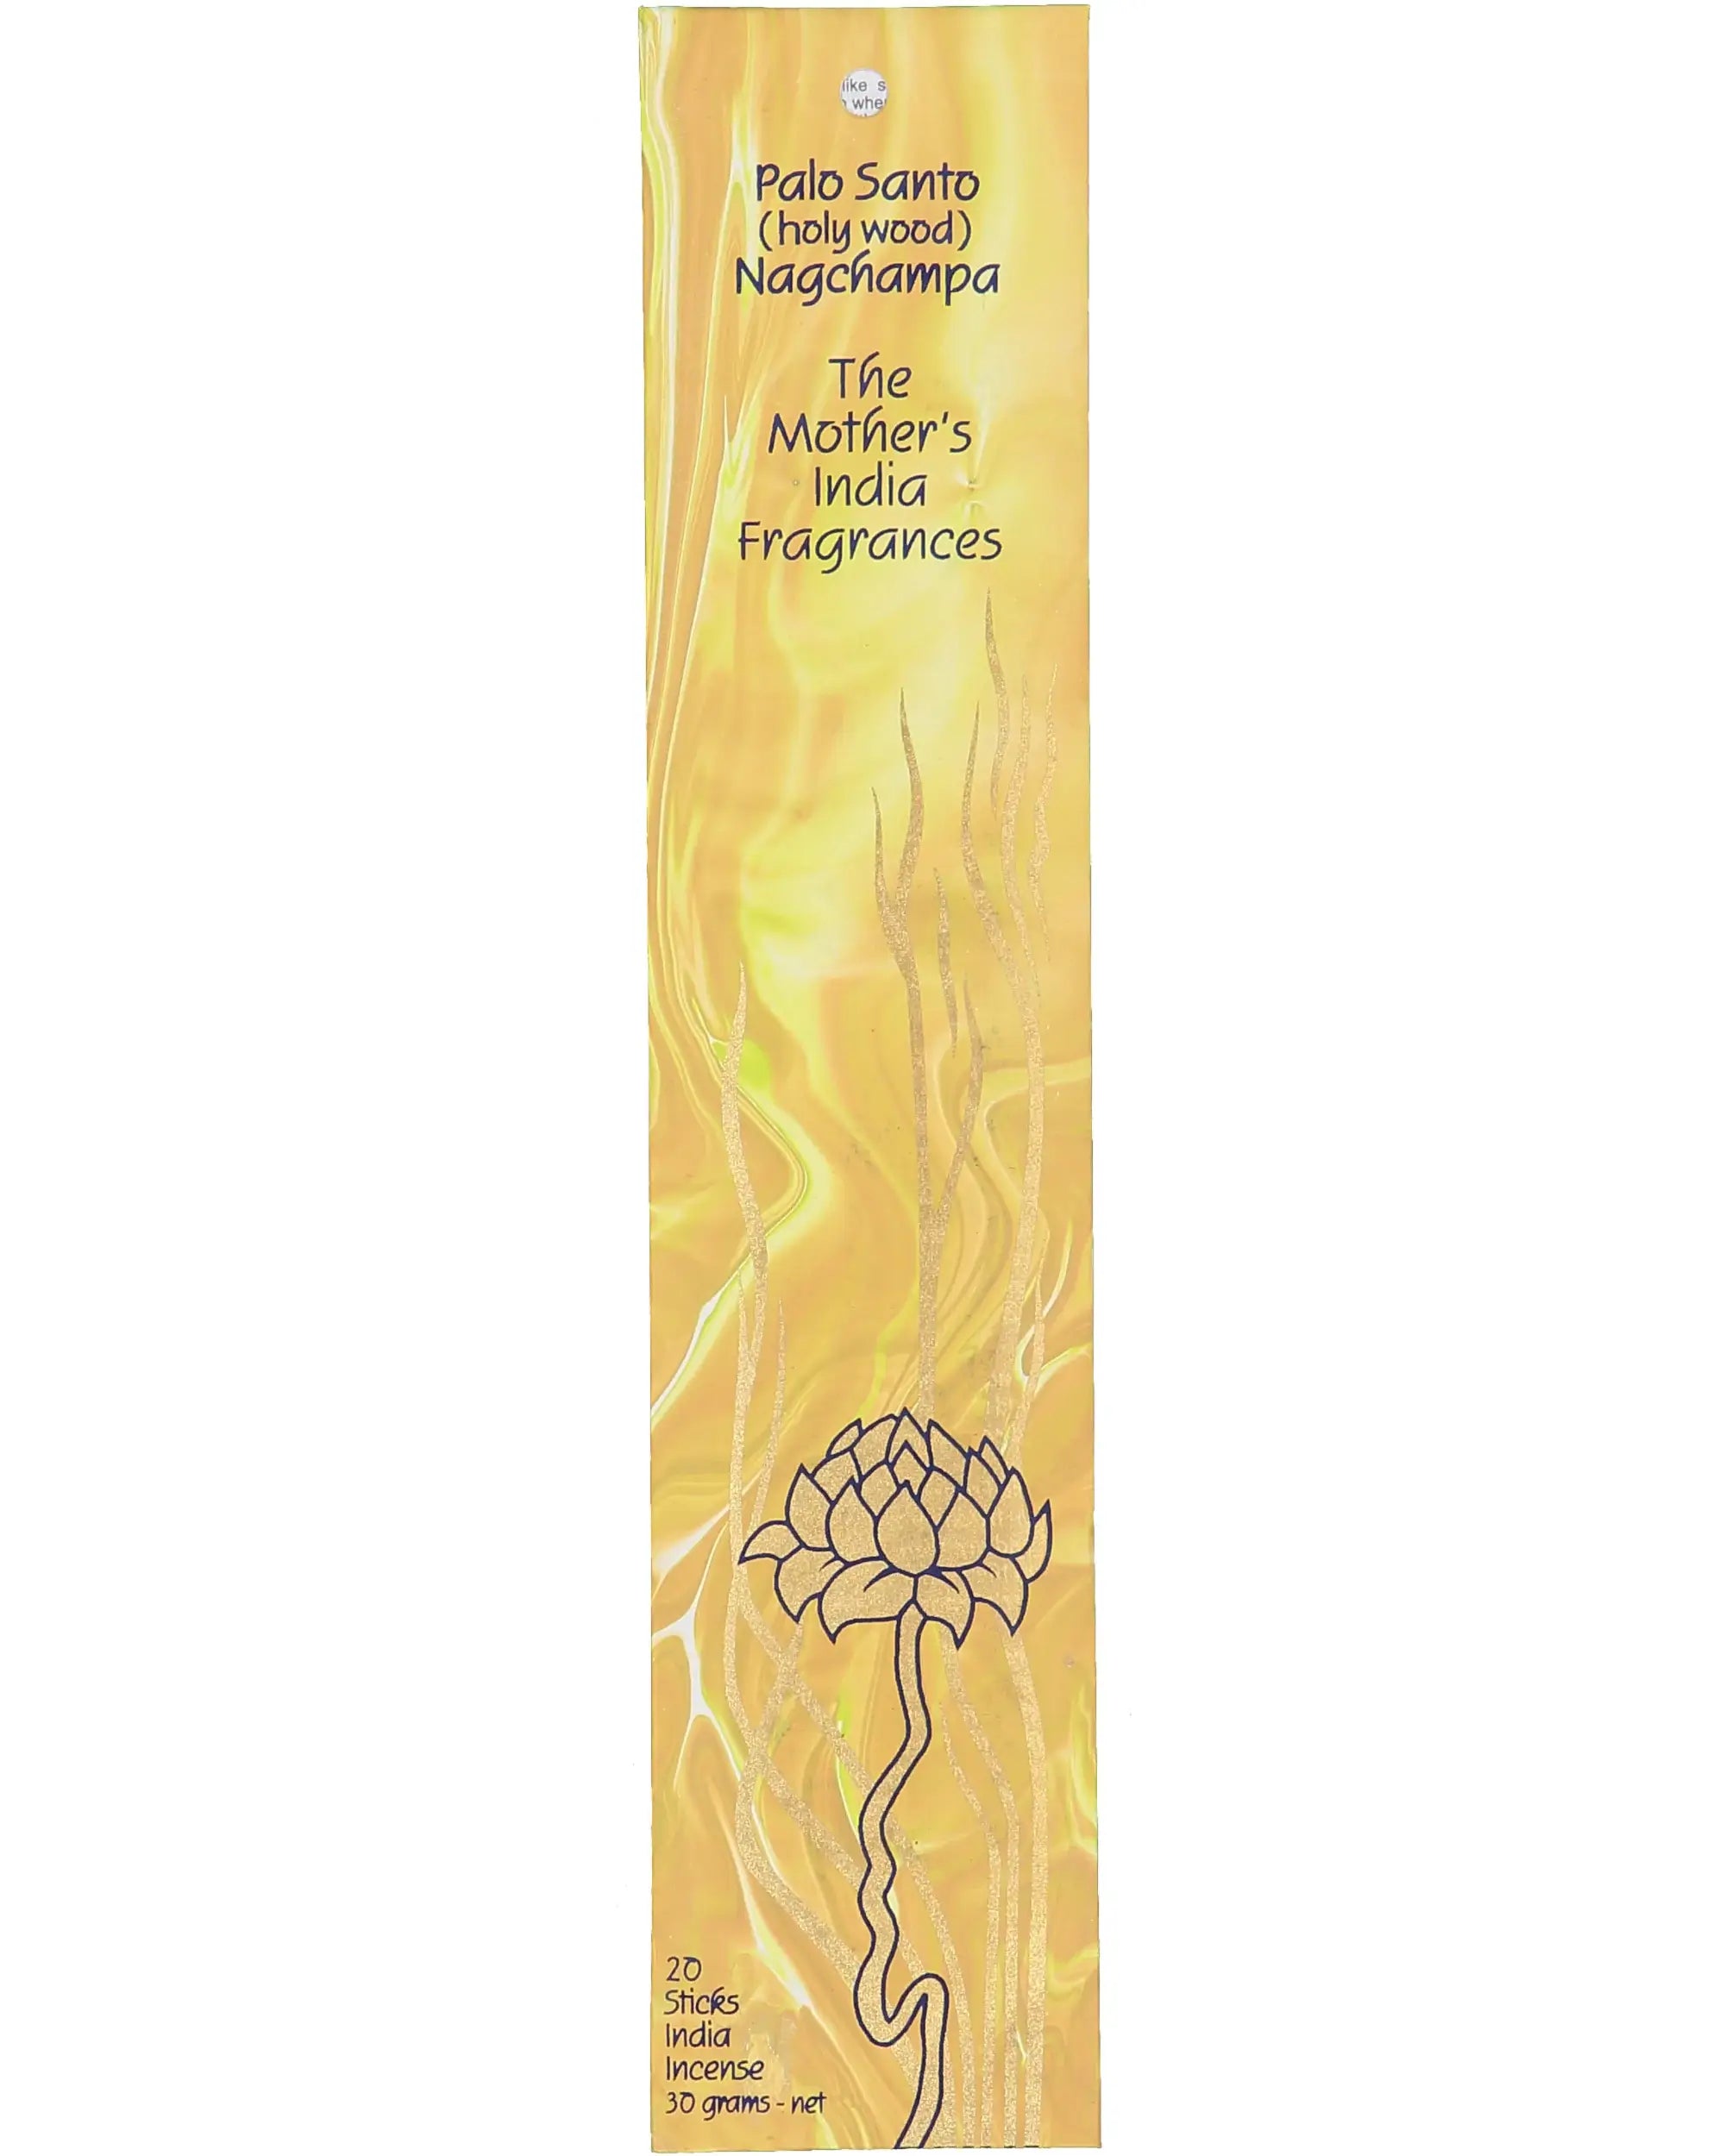 Palo Santo (Holy Wood) Nagchampa Real Incense by The Mother's India Fragrances Tantrika Australia